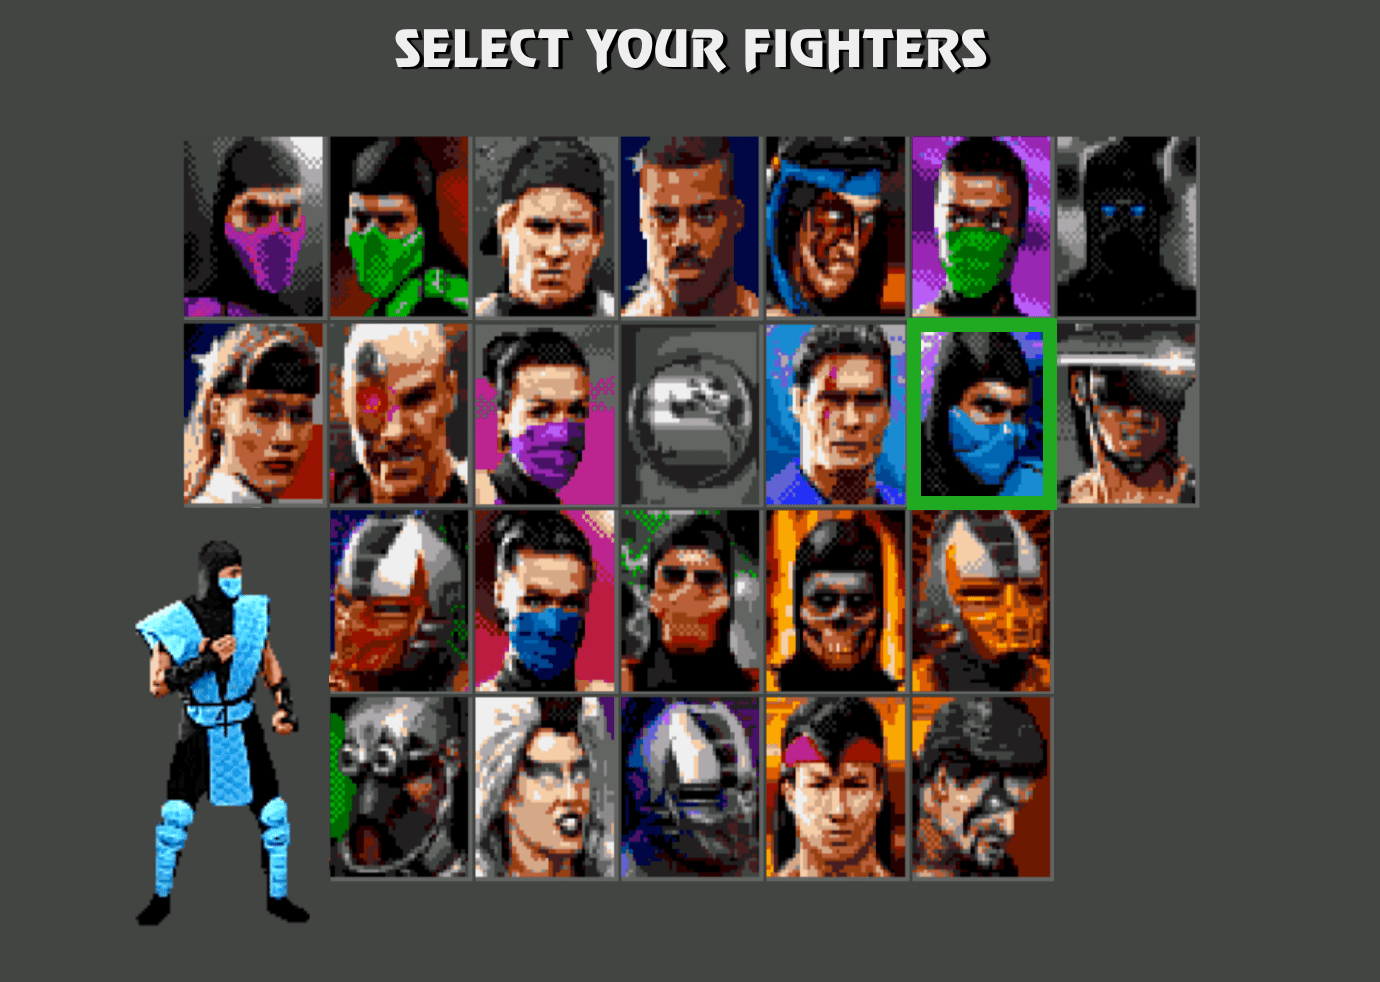 Game 'Mortal Kombat' website cover